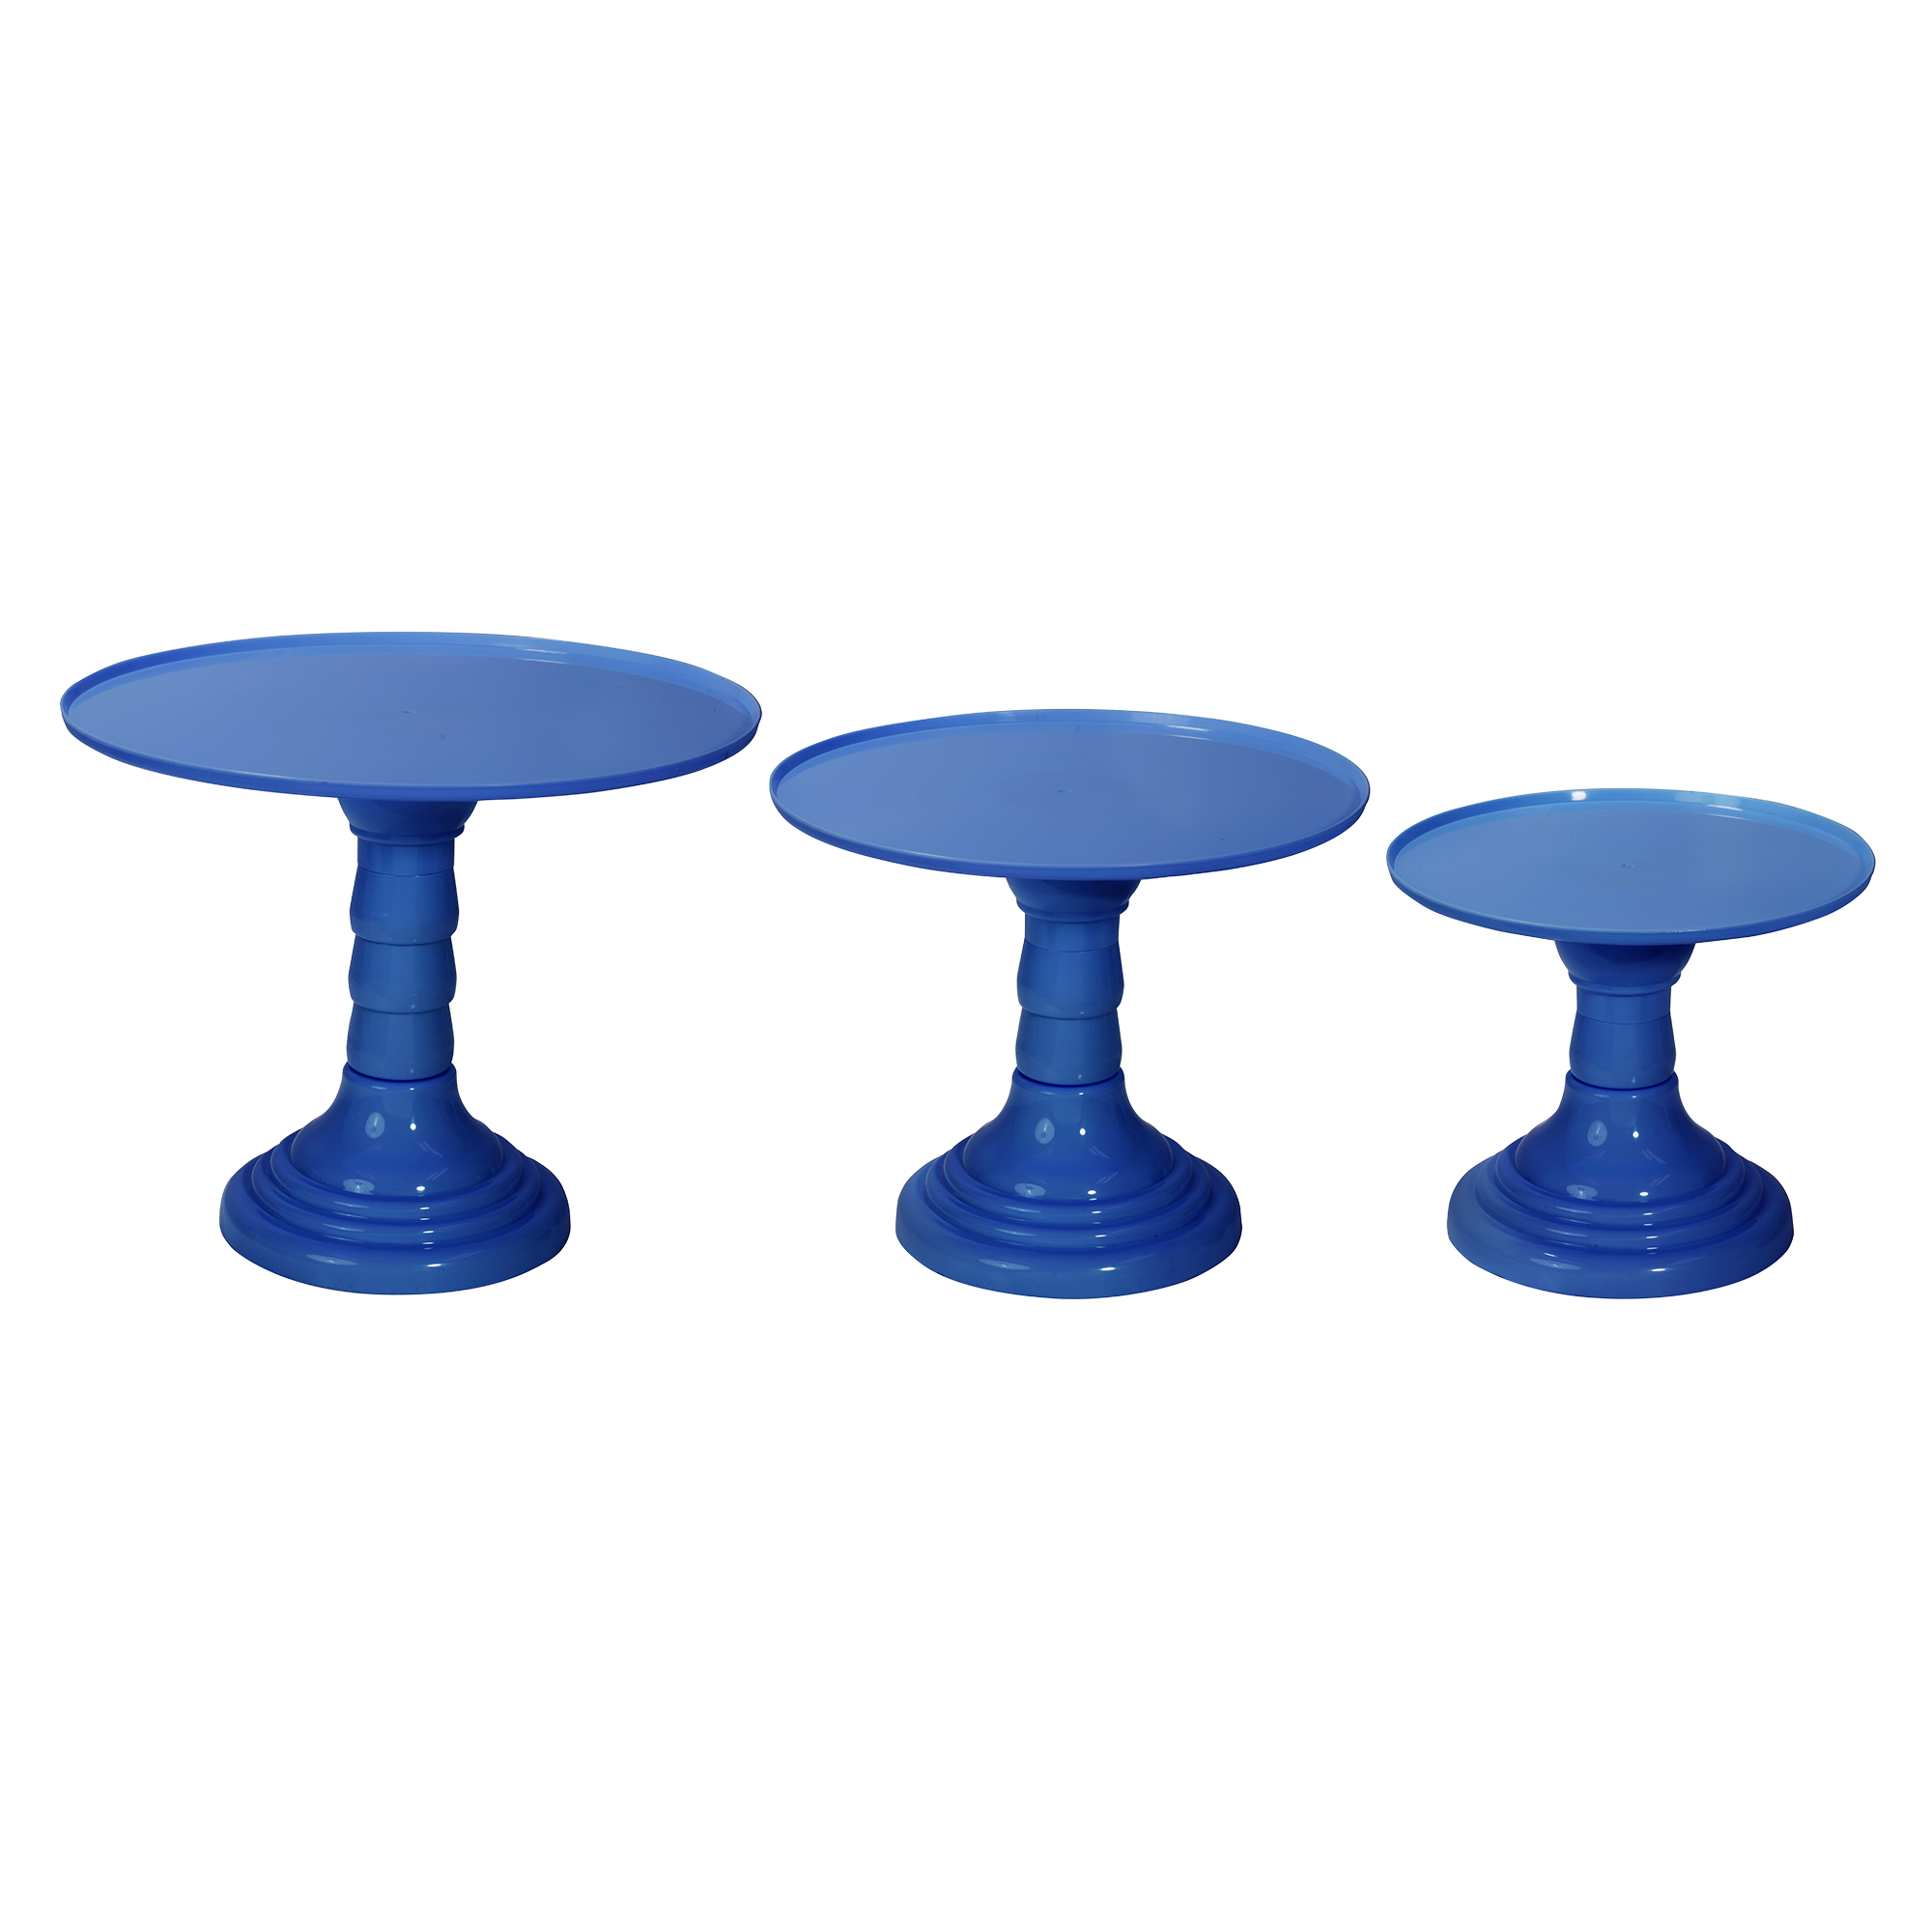 Plastic Cake Stand Pedestals 3pc/set - Royal Blue